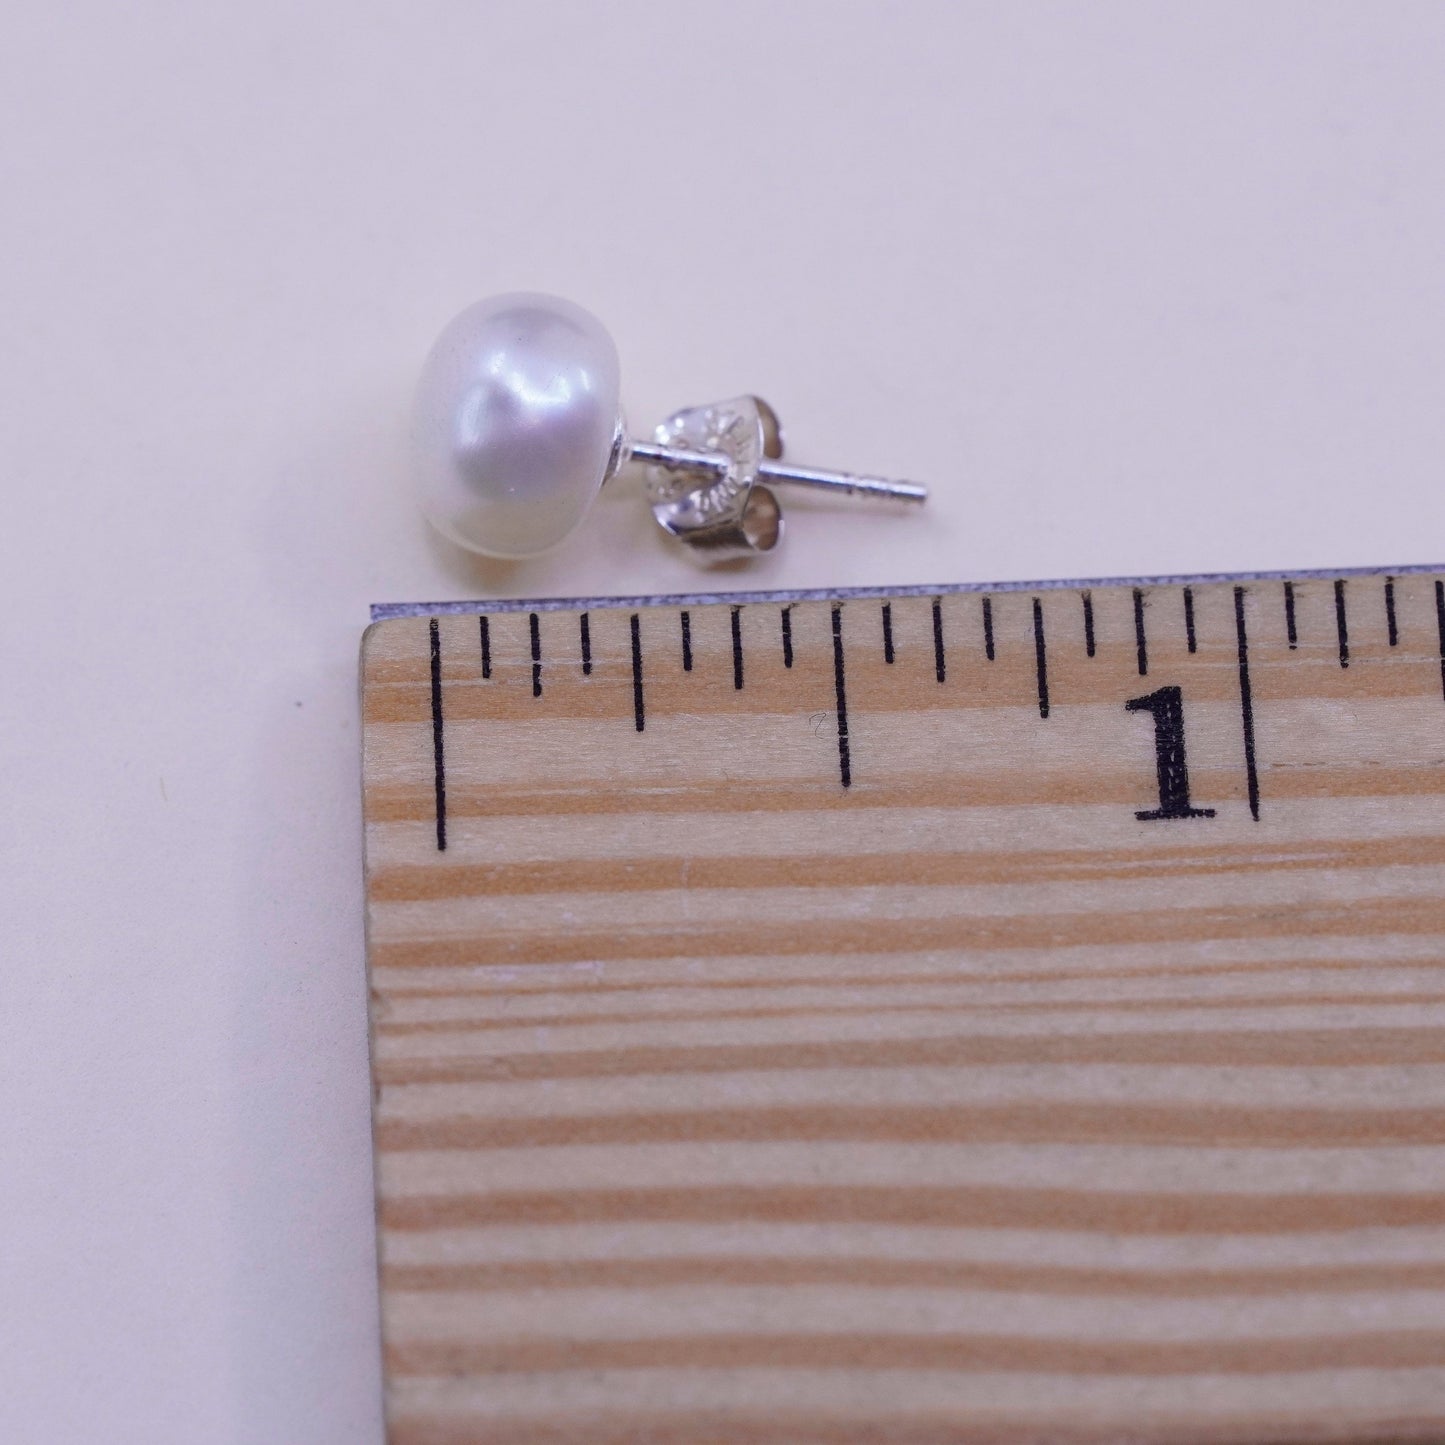 8mm, Vintage sterling silver handmade earrings, 925 studs with freshwater pearl